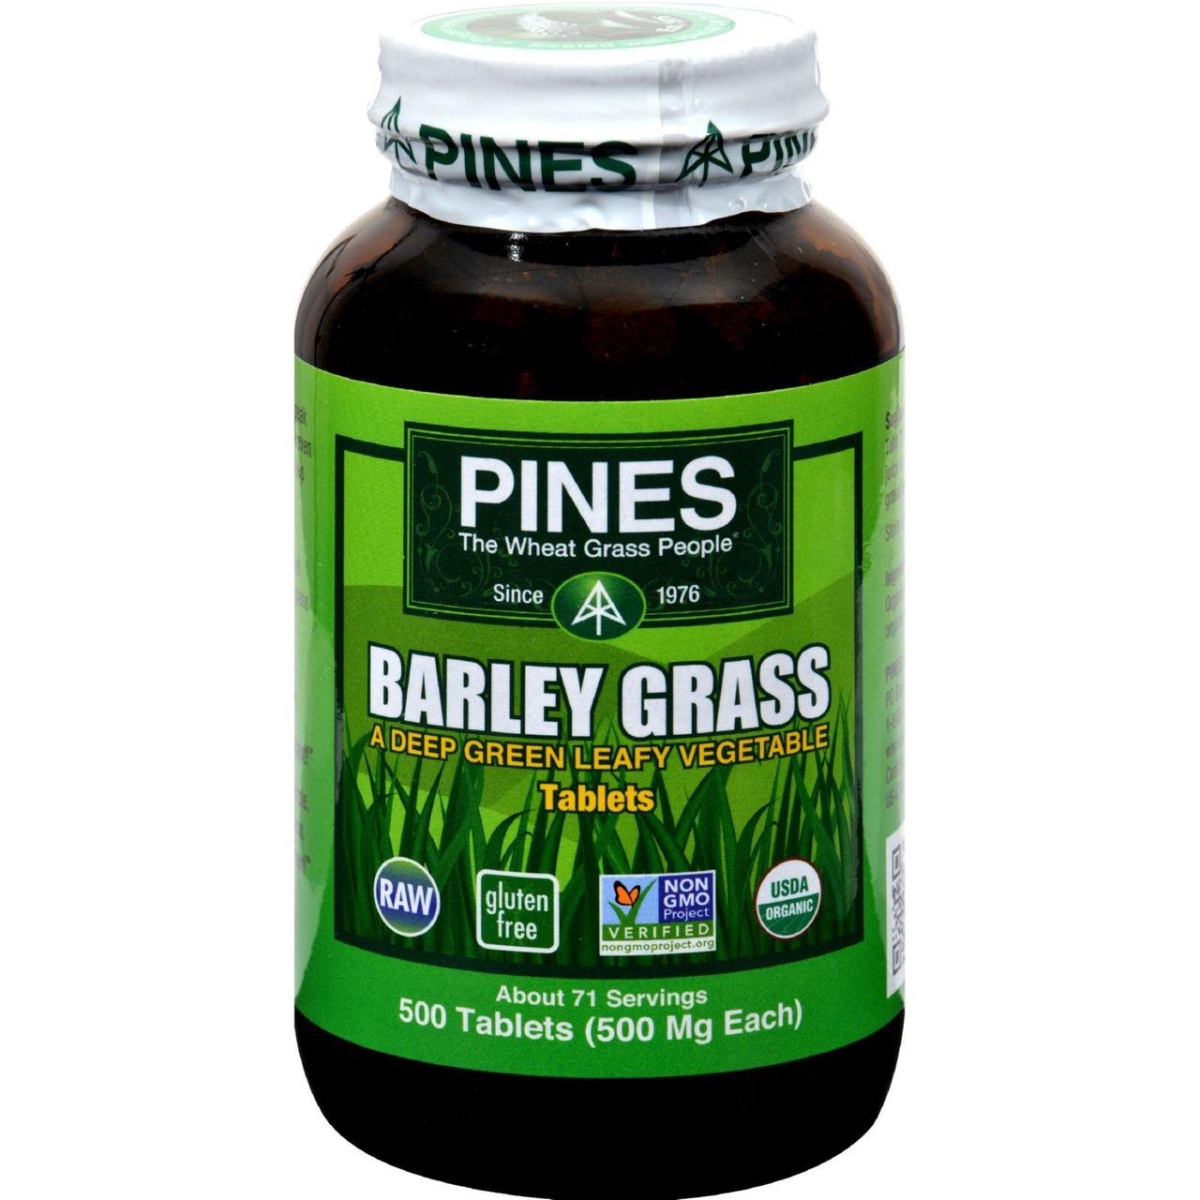 Hg0914283 500 Mg Barley Grass - 500 Tablets